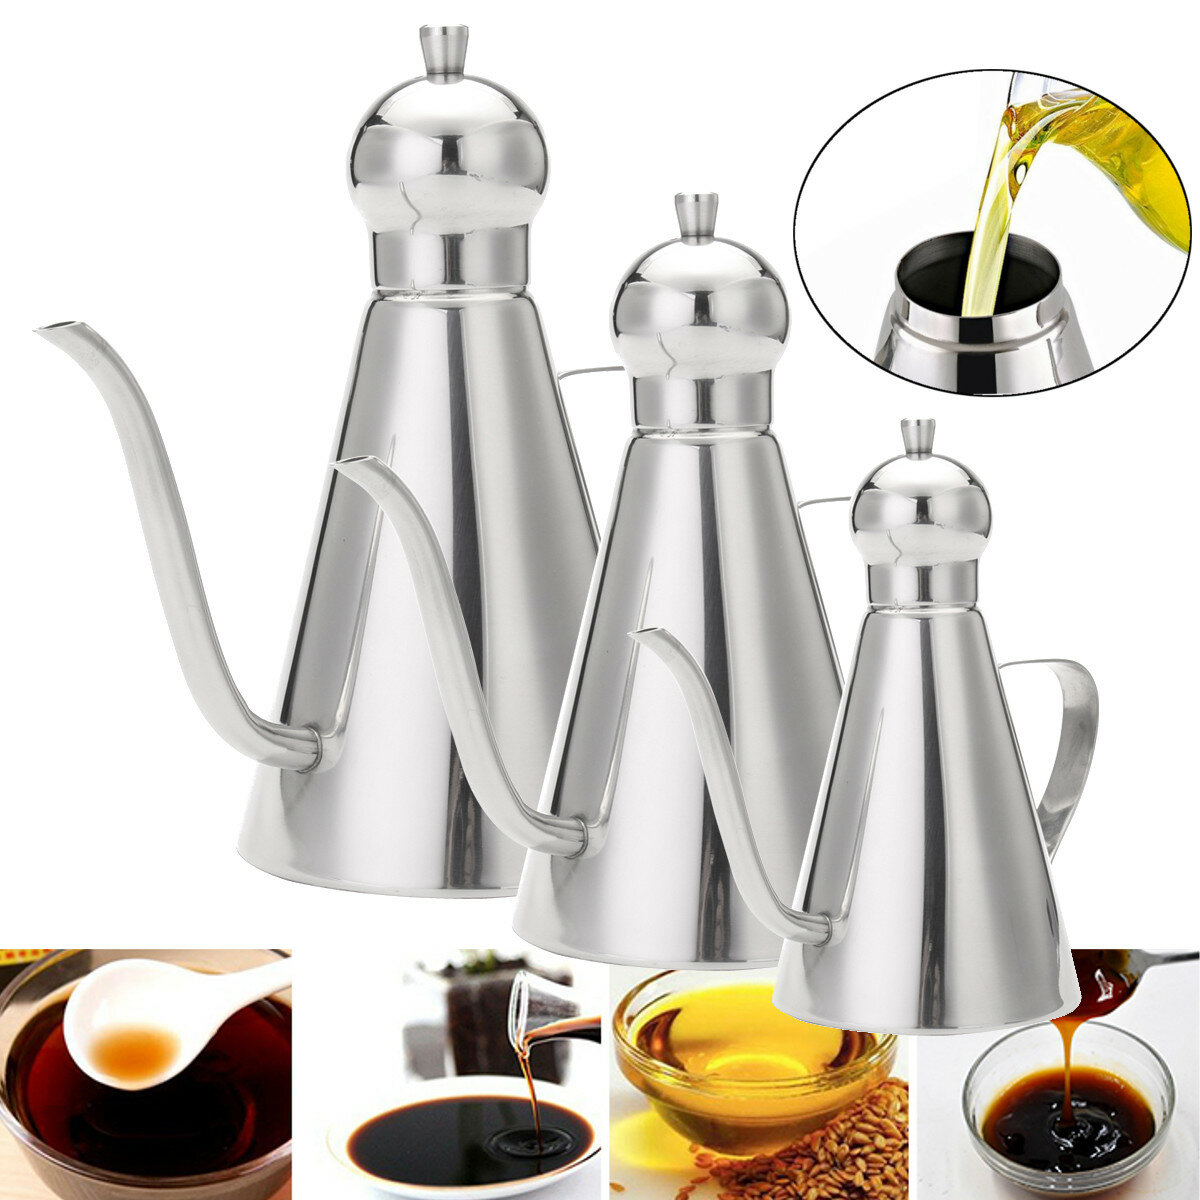 0.35l/0.5l/1l stainless steel olive oil vinegar dispenser jar kitchen Olive Oil Stainless Steel Dispenser